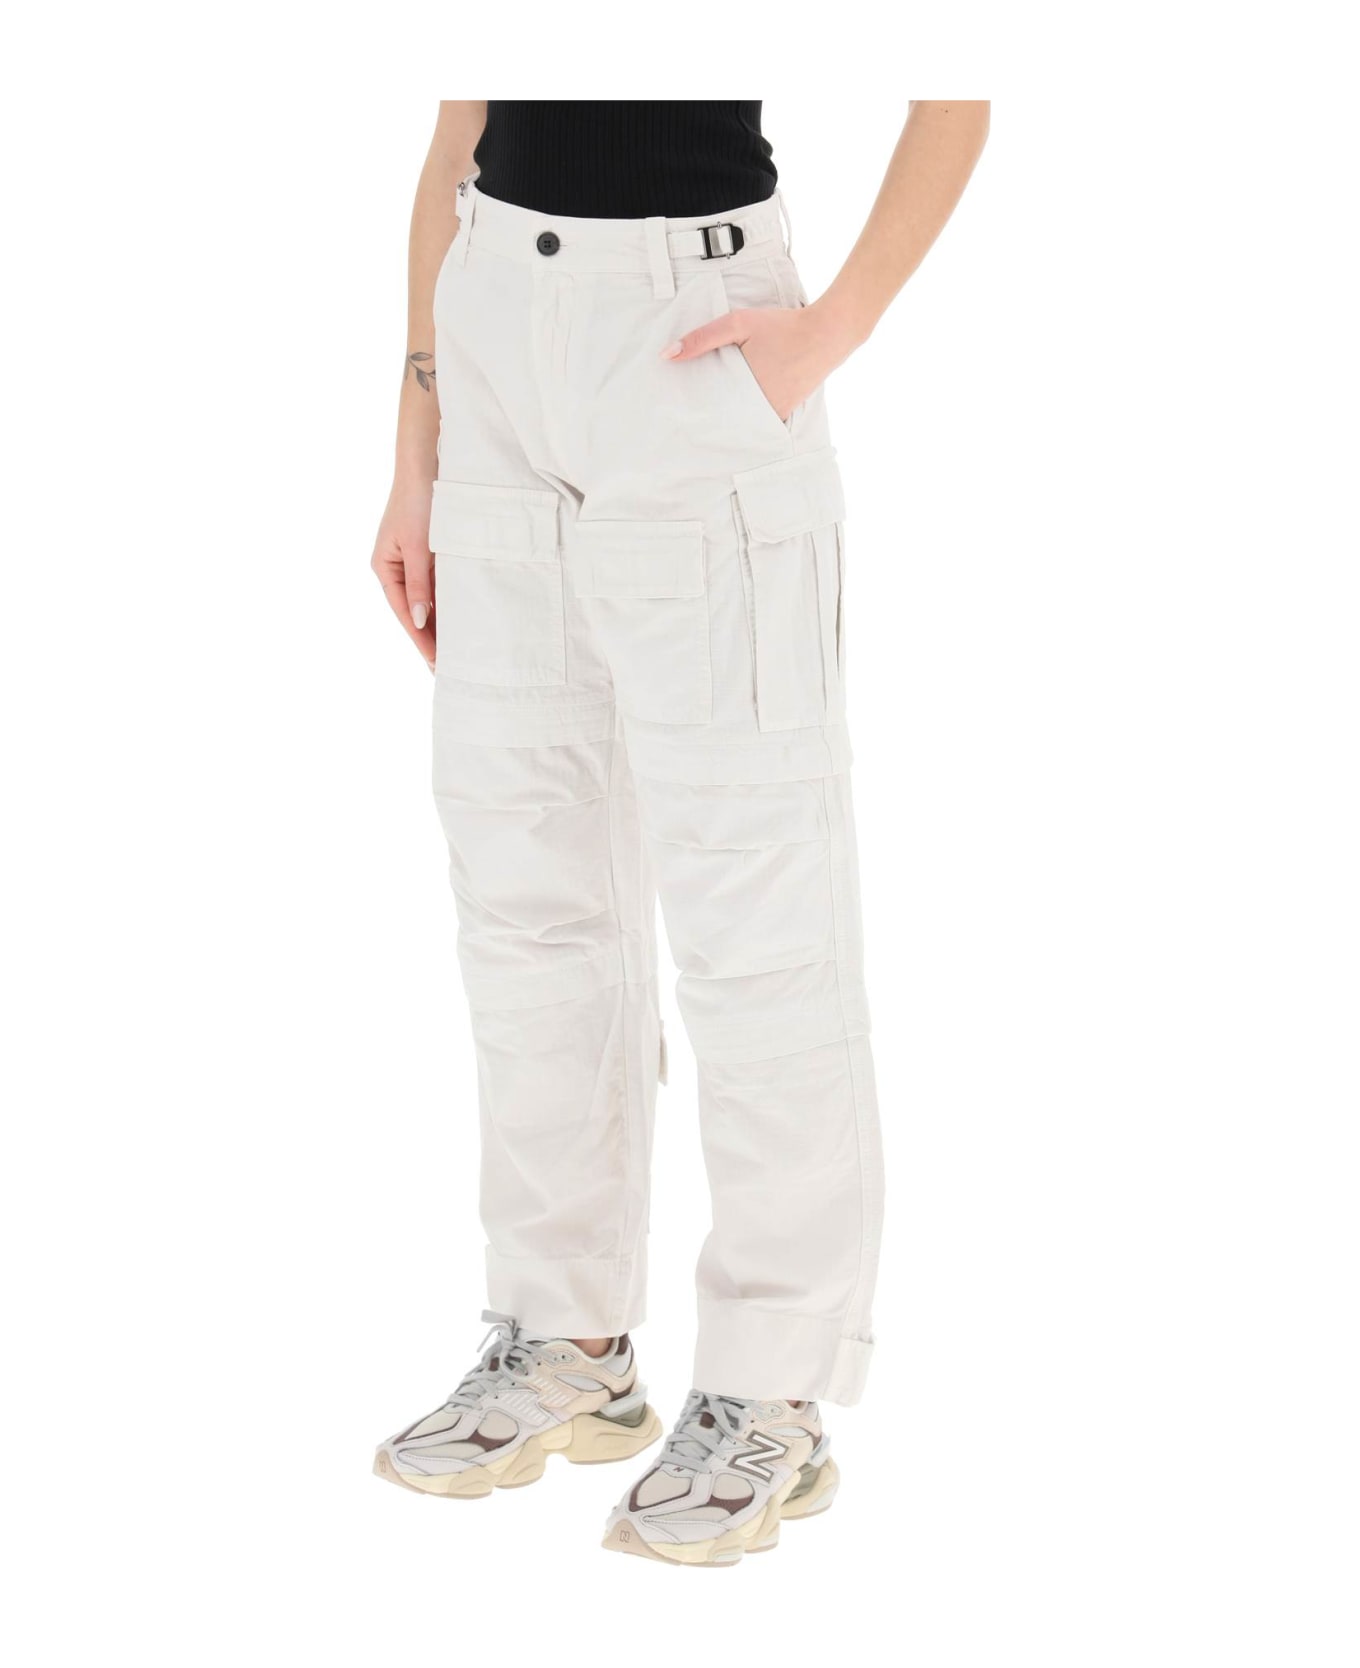 DARKPARK 'julia' Ripstop Cotton Cargo Pants - OFF WHITE (White) ボトムス